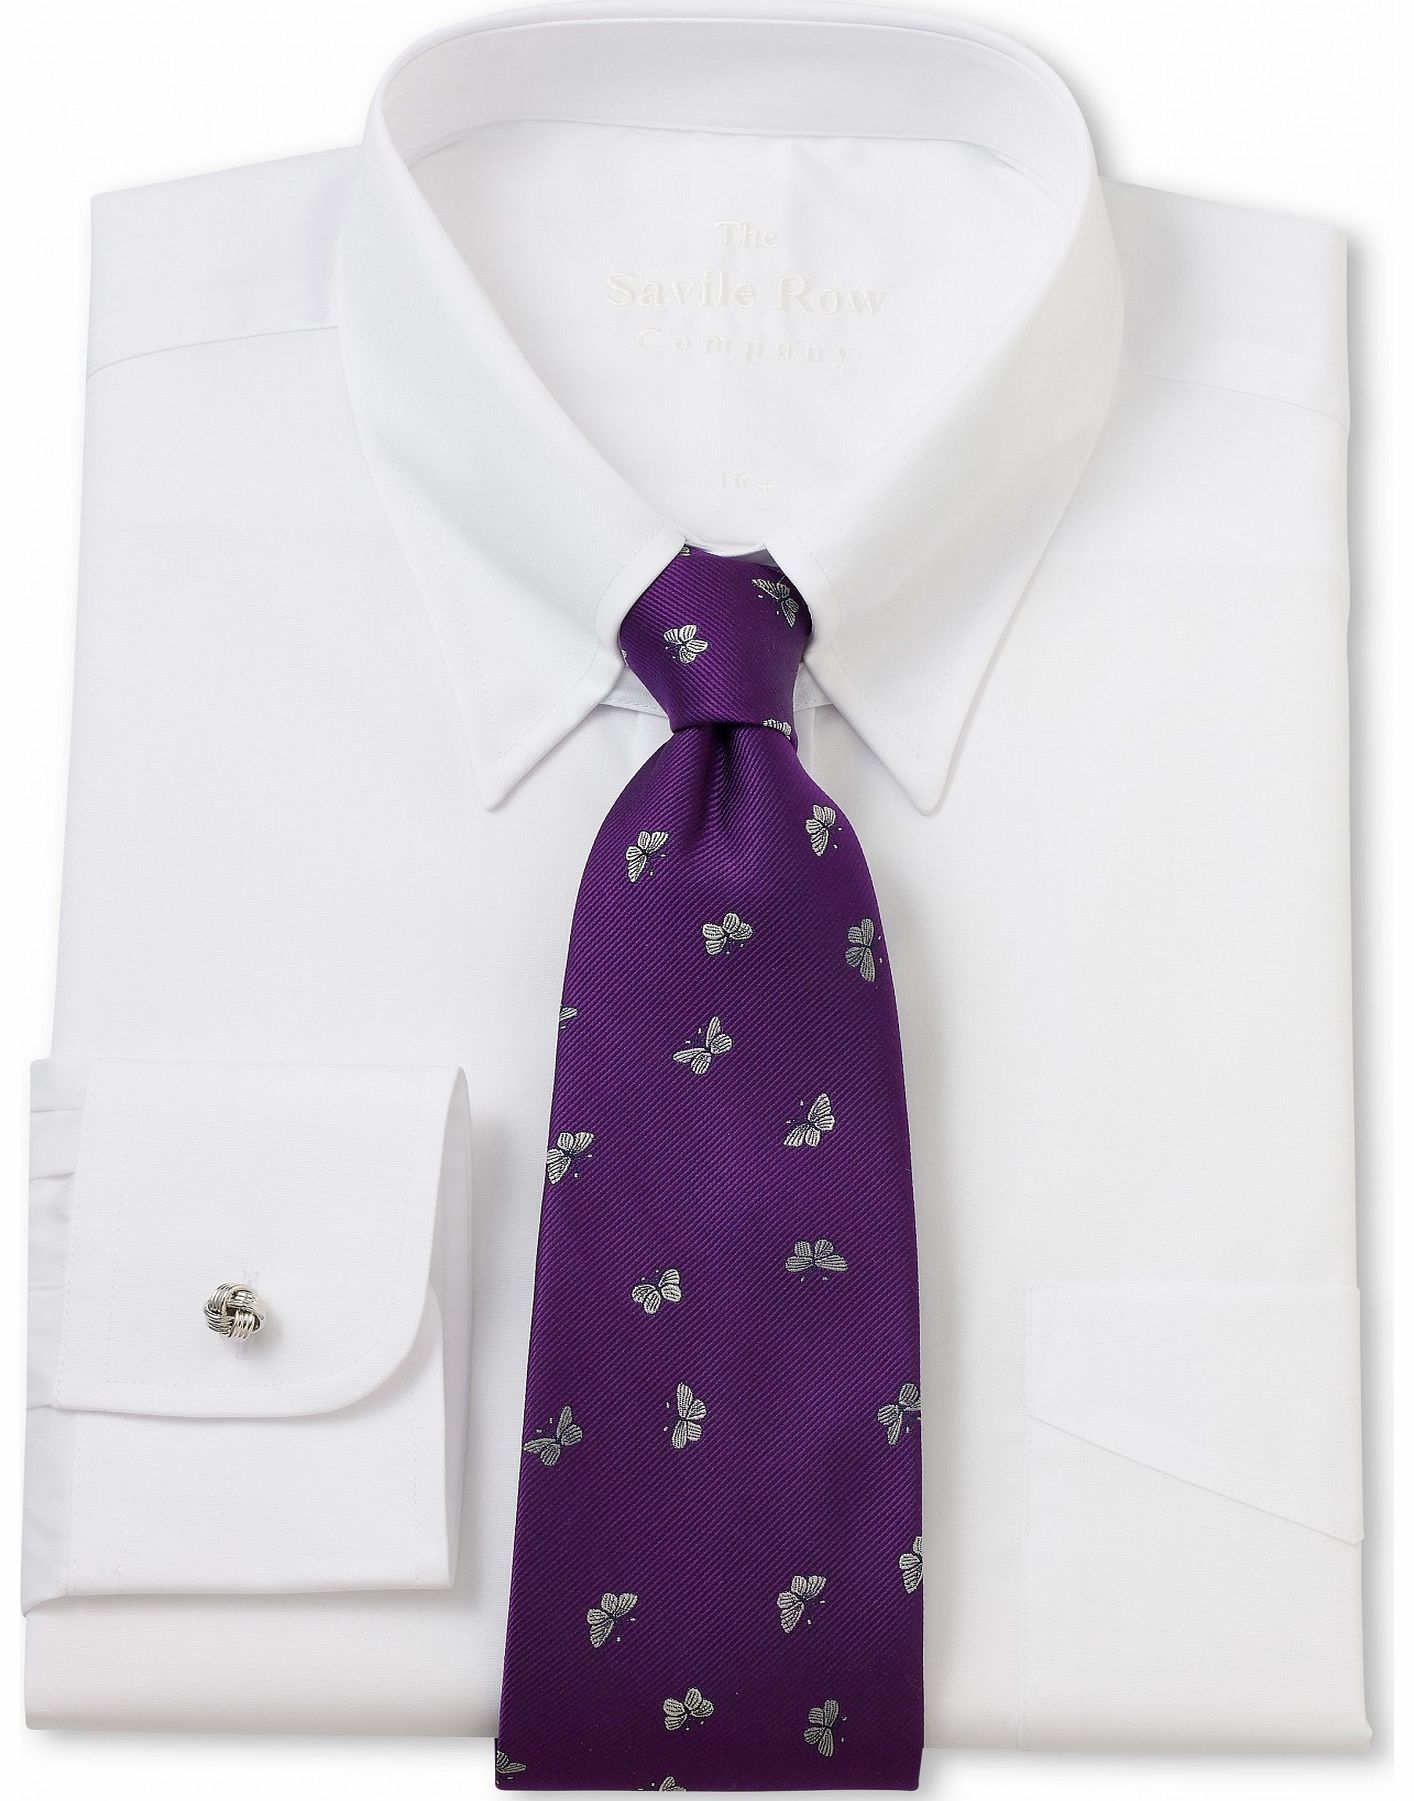 Savile Row Company White Poplin Tab Collar Classic Fit Shirt 19``